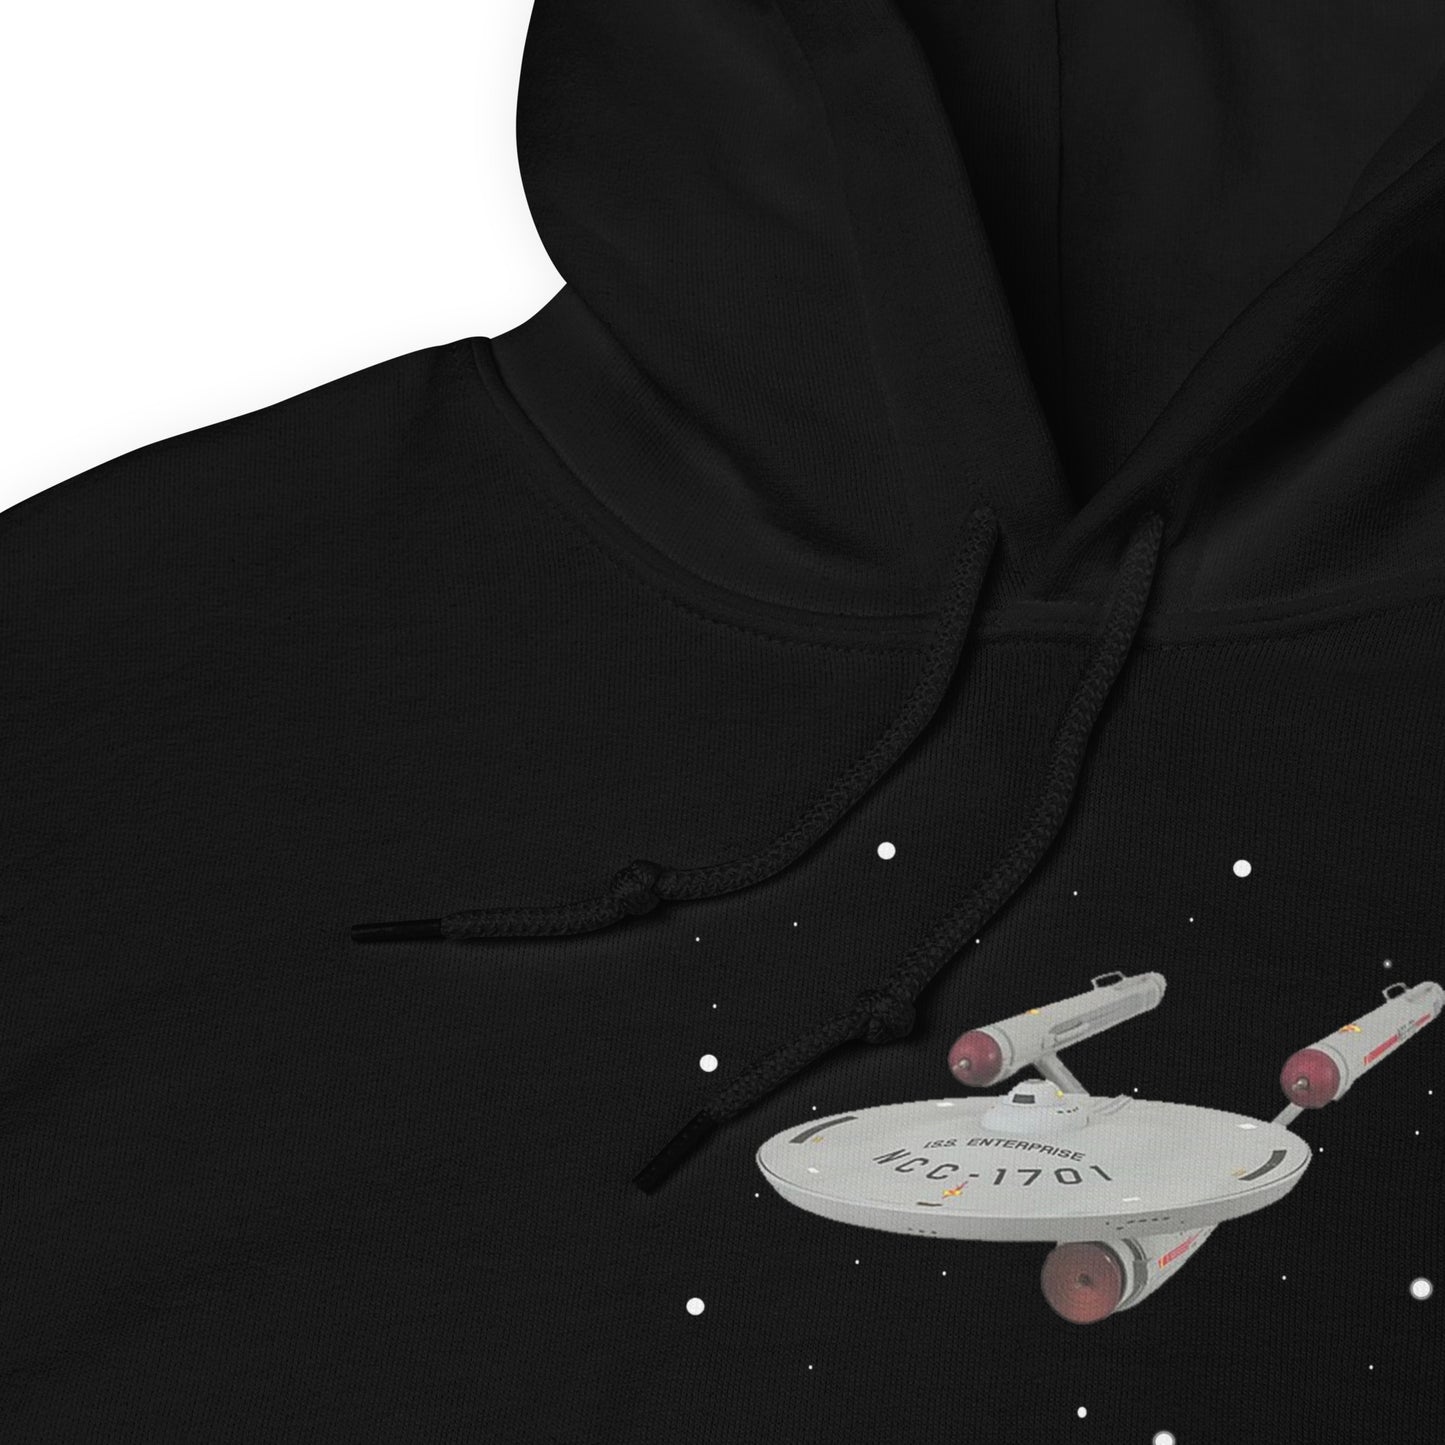 Starship Enterprise Hoodie - LuminoPlace